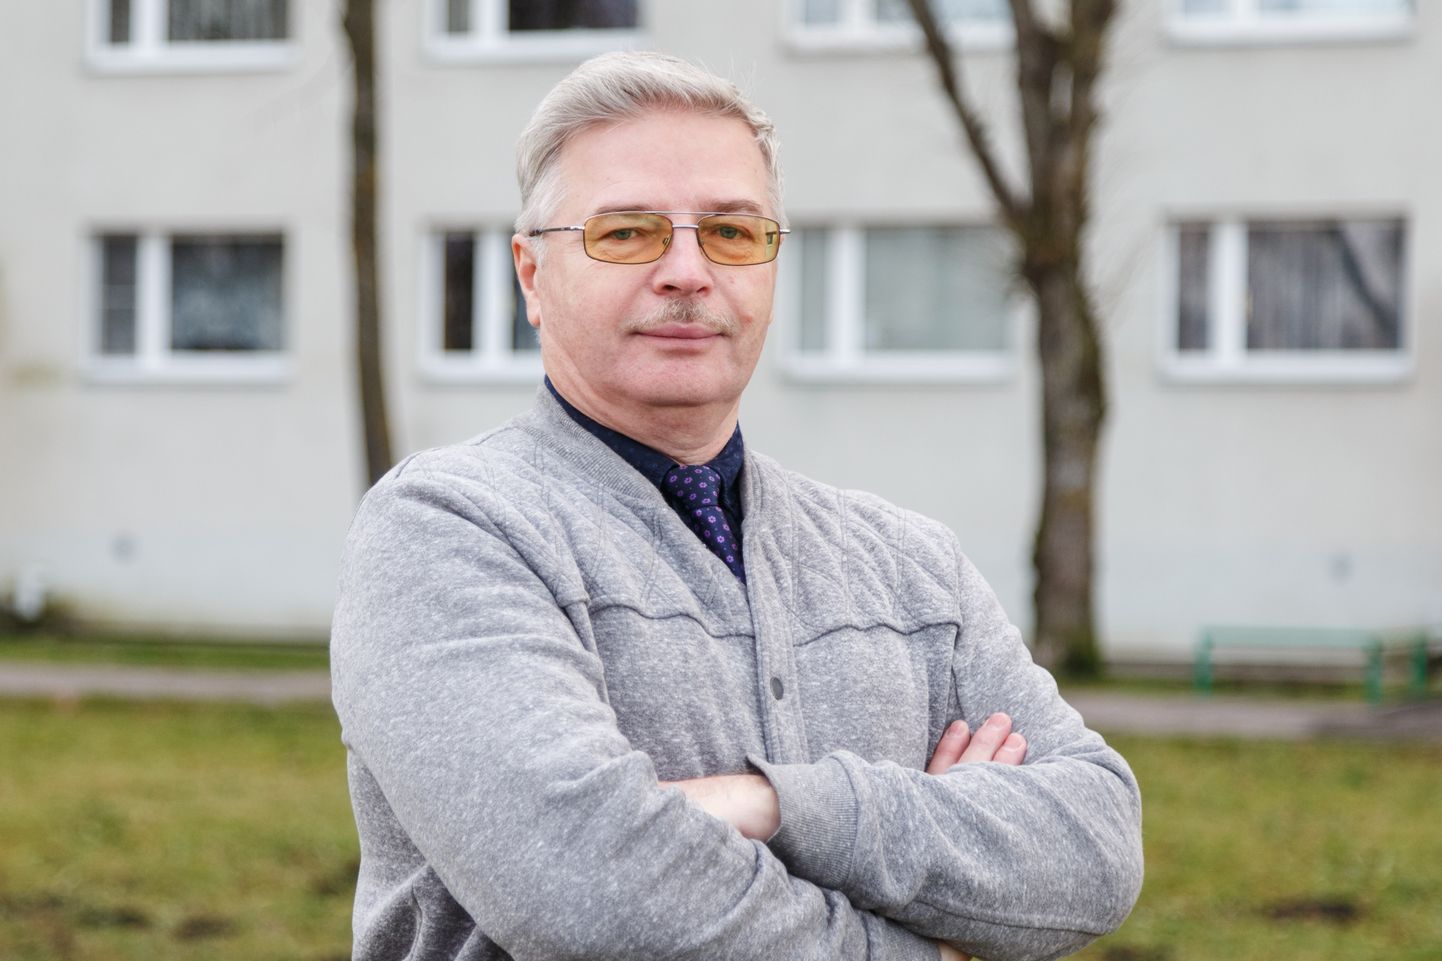 Andrey Kuzichkin, a political refugee living in Estonia, became a citizen of Estonia last week.